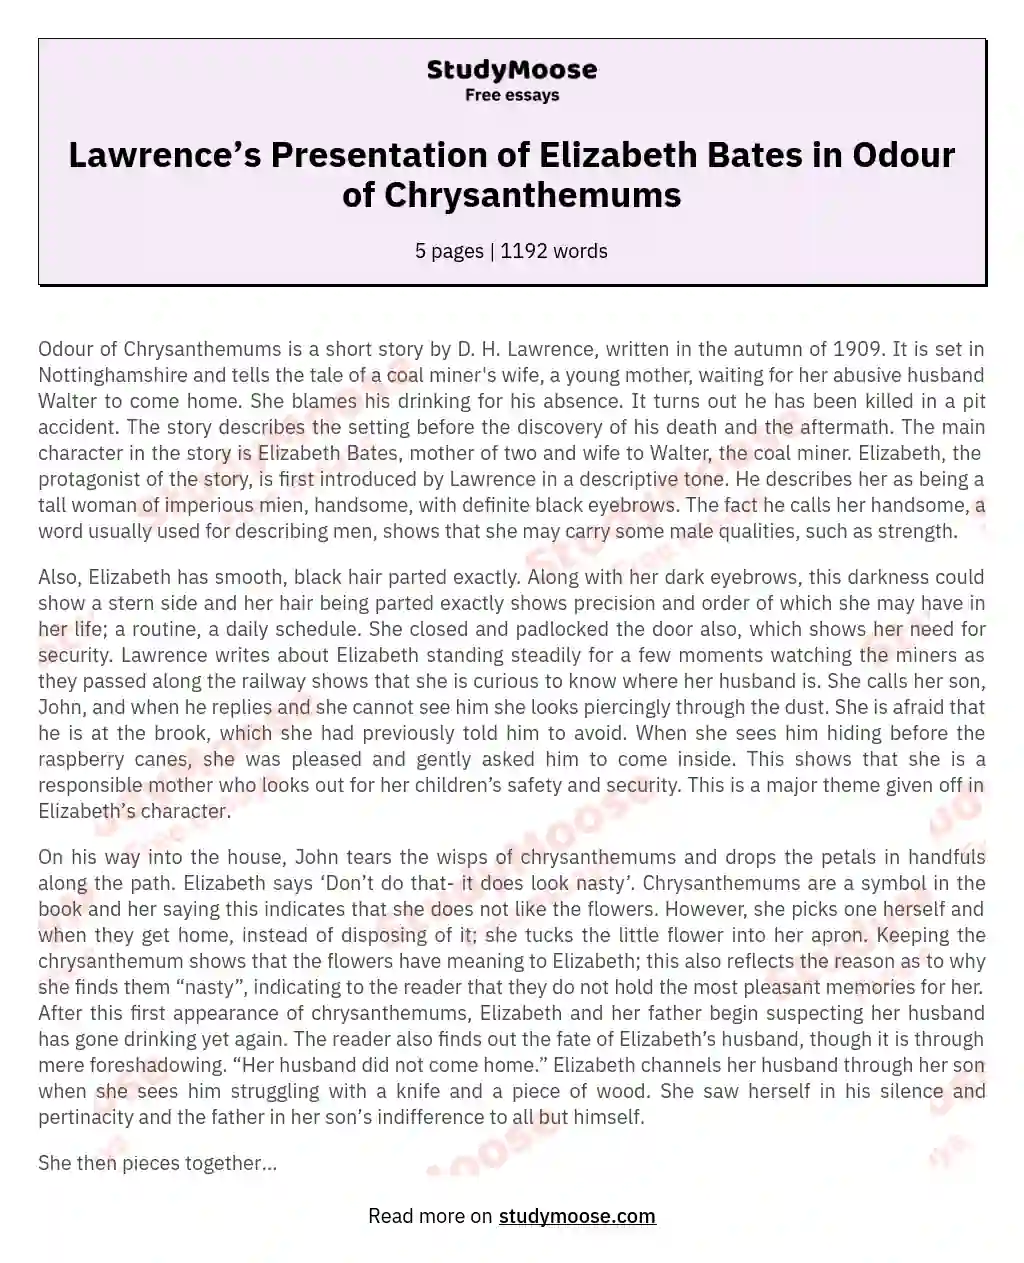 Lawrence’s Presentation of Elizabeth Bates in Odour of Chrysanthemums